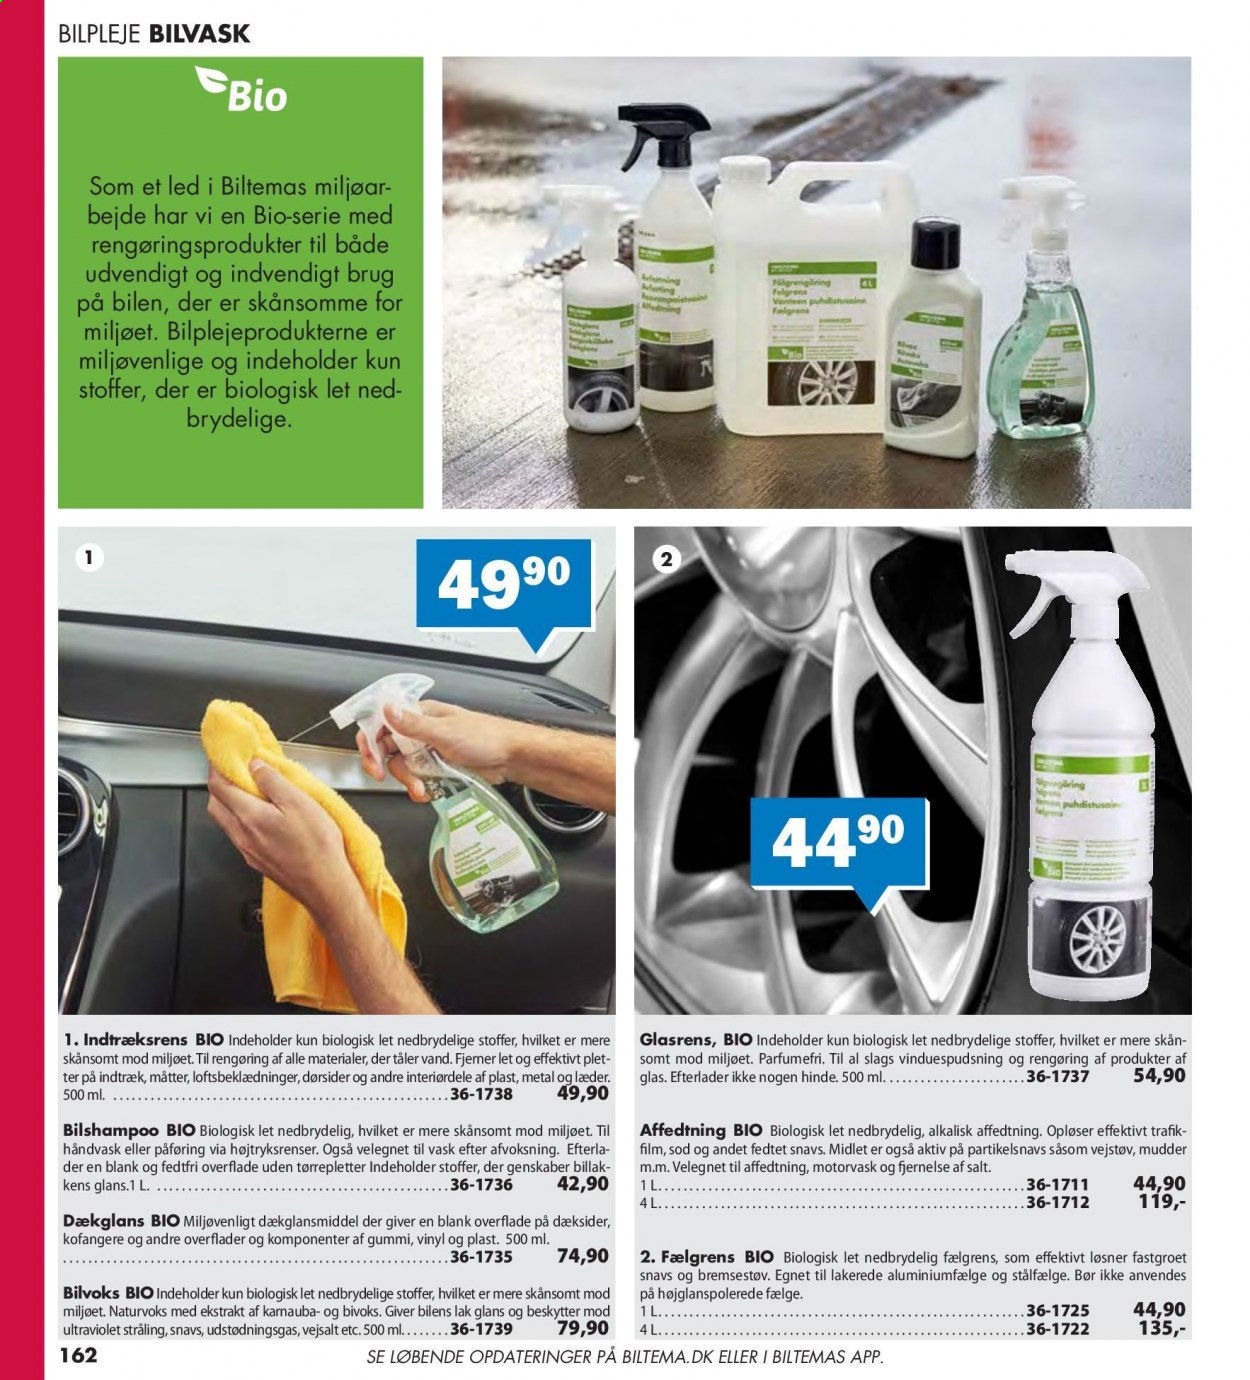 thumbnail - Biltema tilbud  - tilbudsprodukter - glas, højtryksrenser, bilshampoo. Side 162.